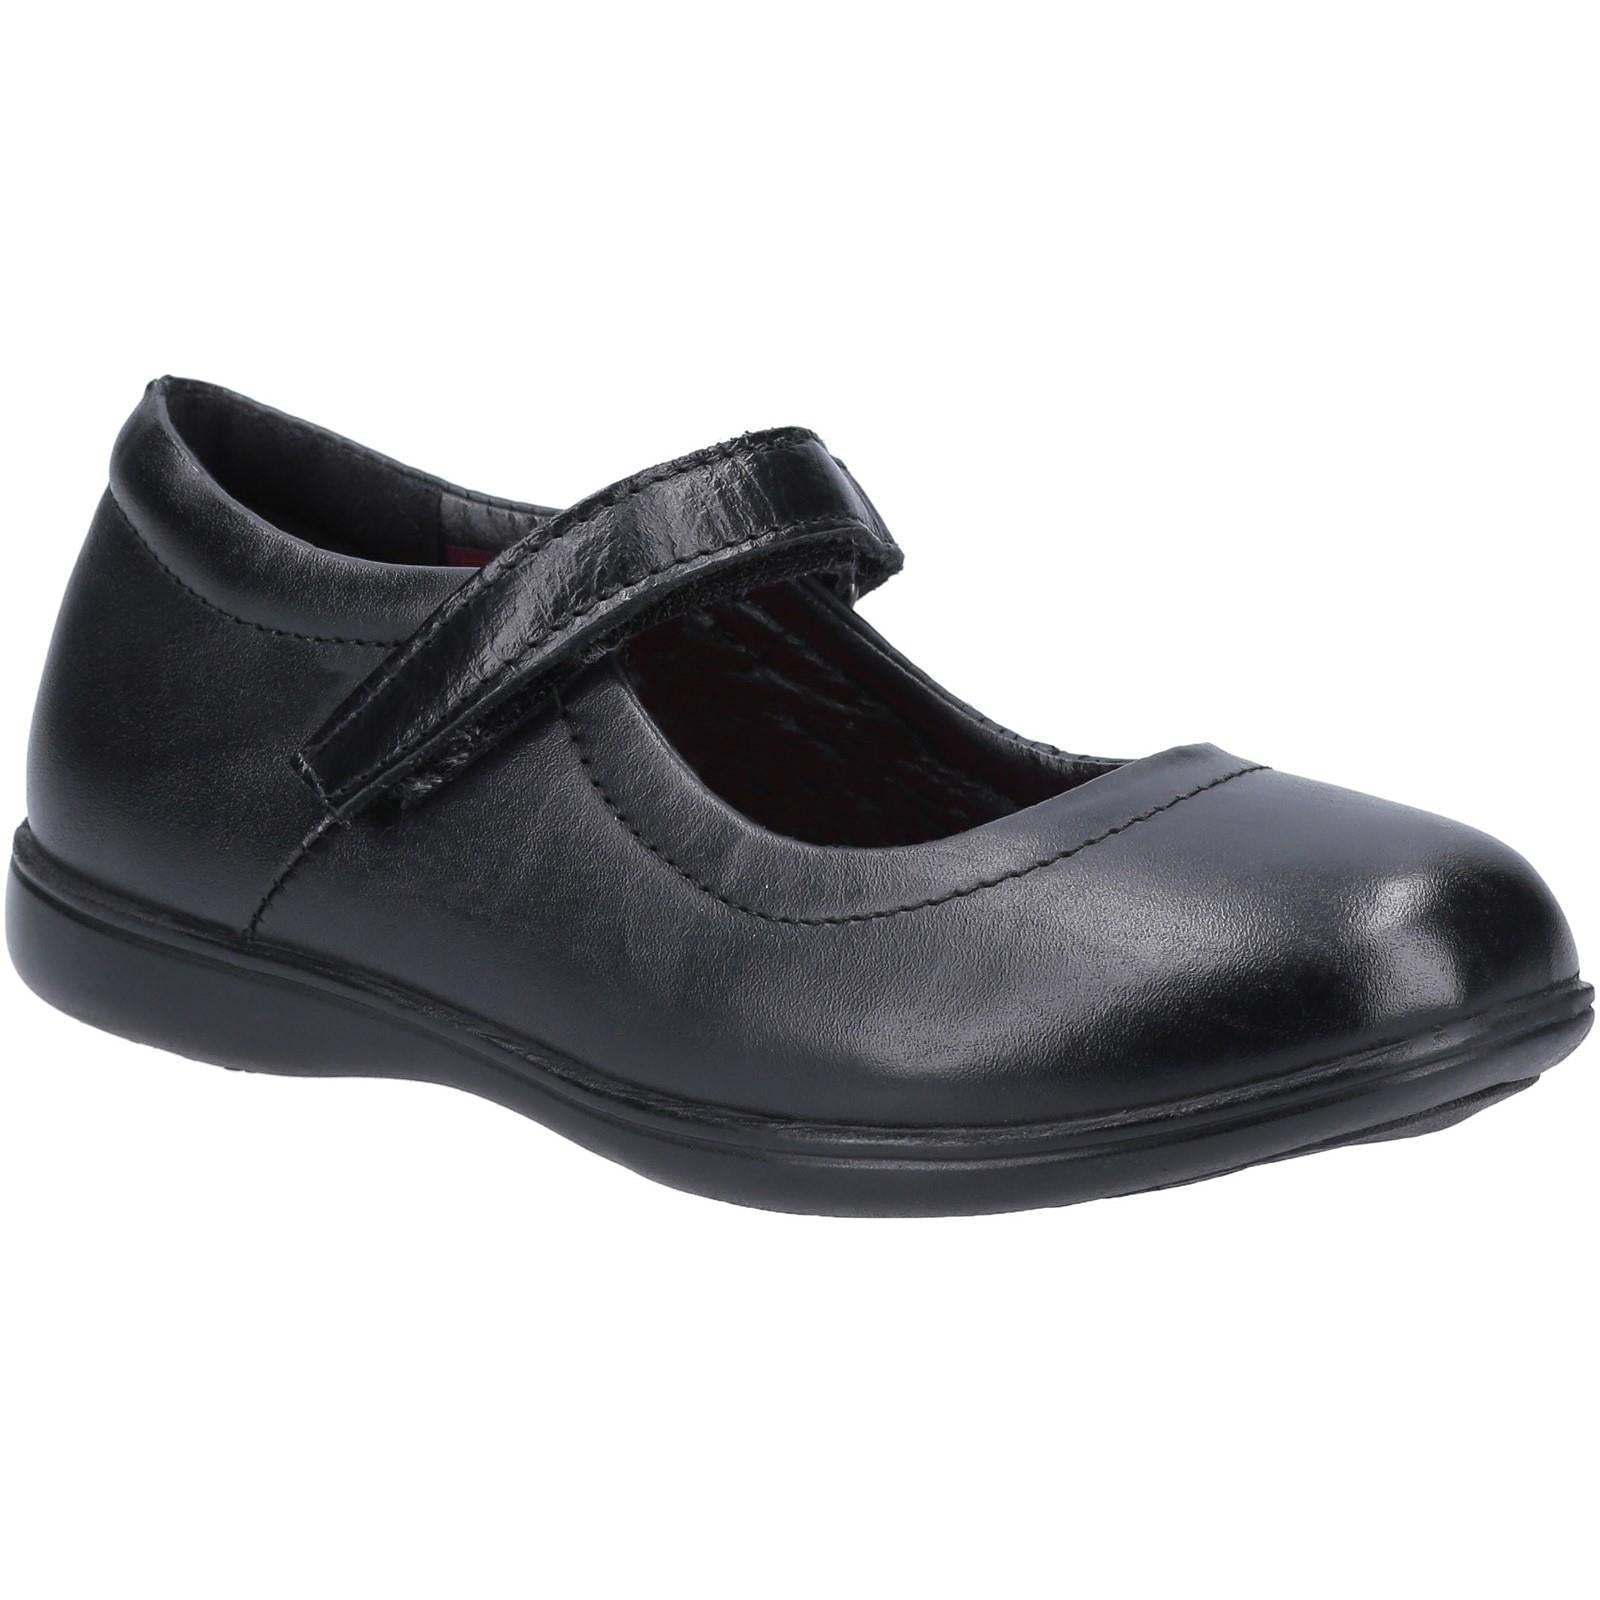 MIRAK Lucie junior black leather touch fasten Mary Jane formal school shoe